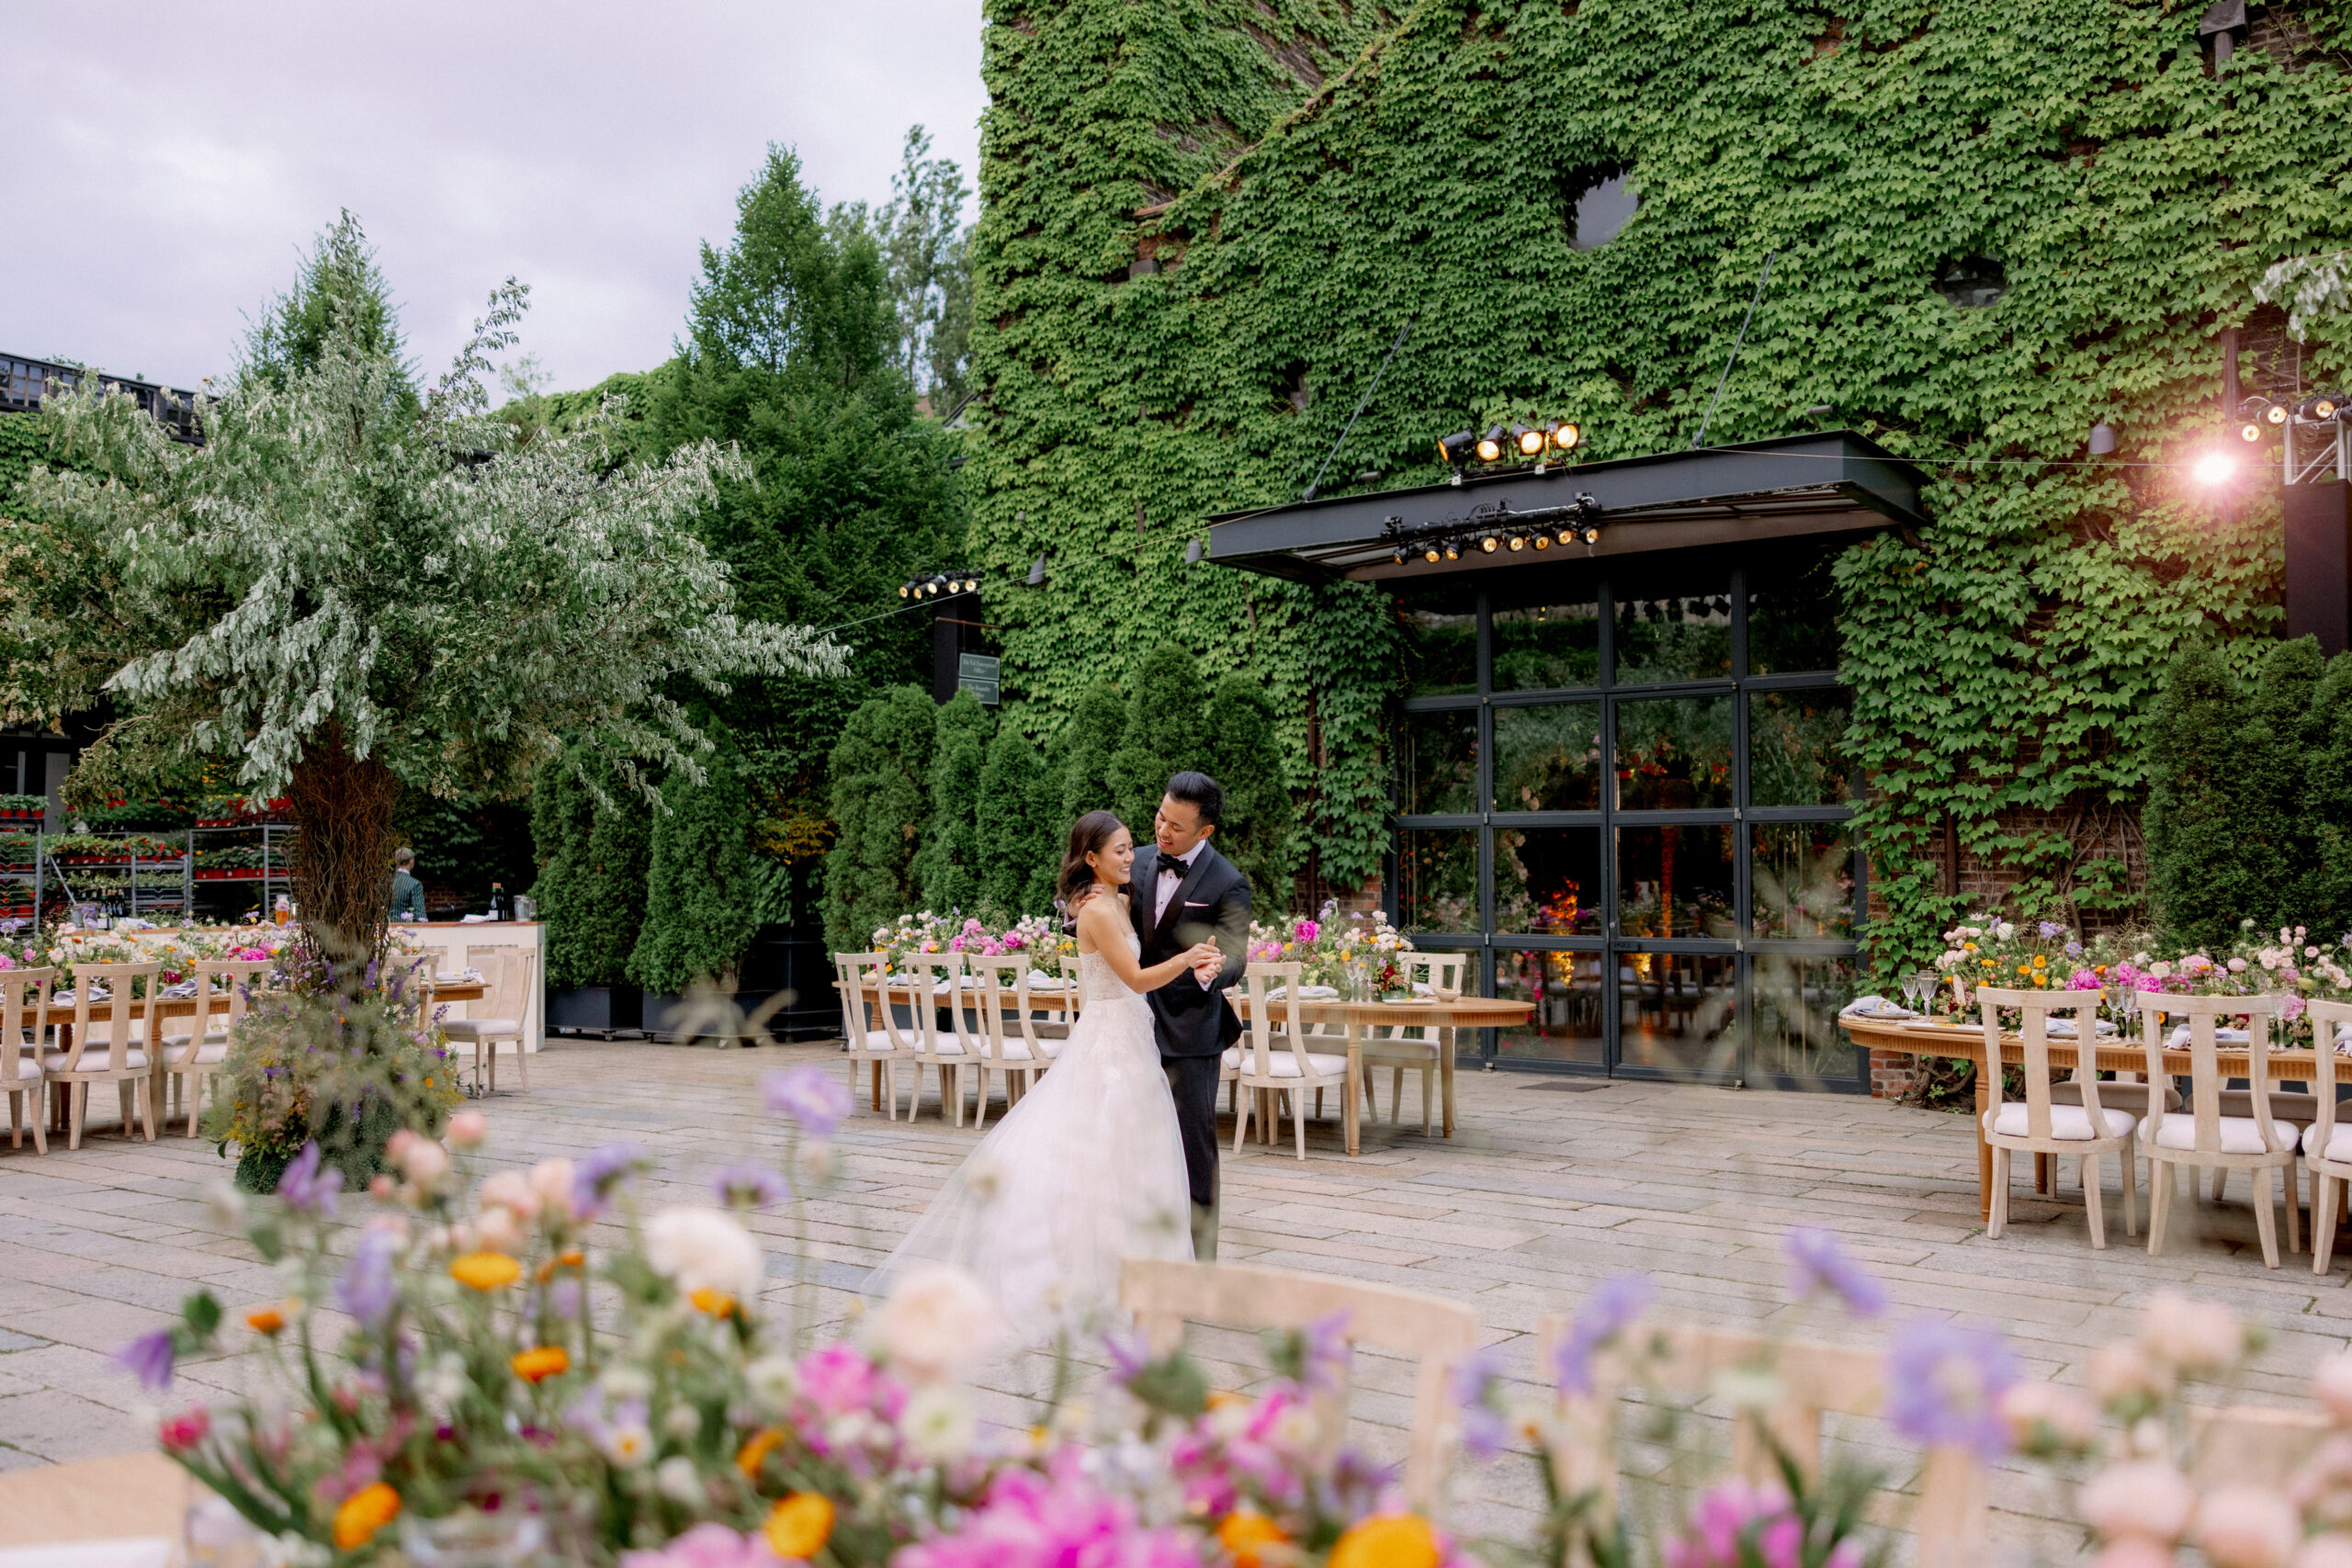 Beautiful wedding reception set-up at The Foundry, NY. Luxurious wedding venues Image by Jenny Fu Studio